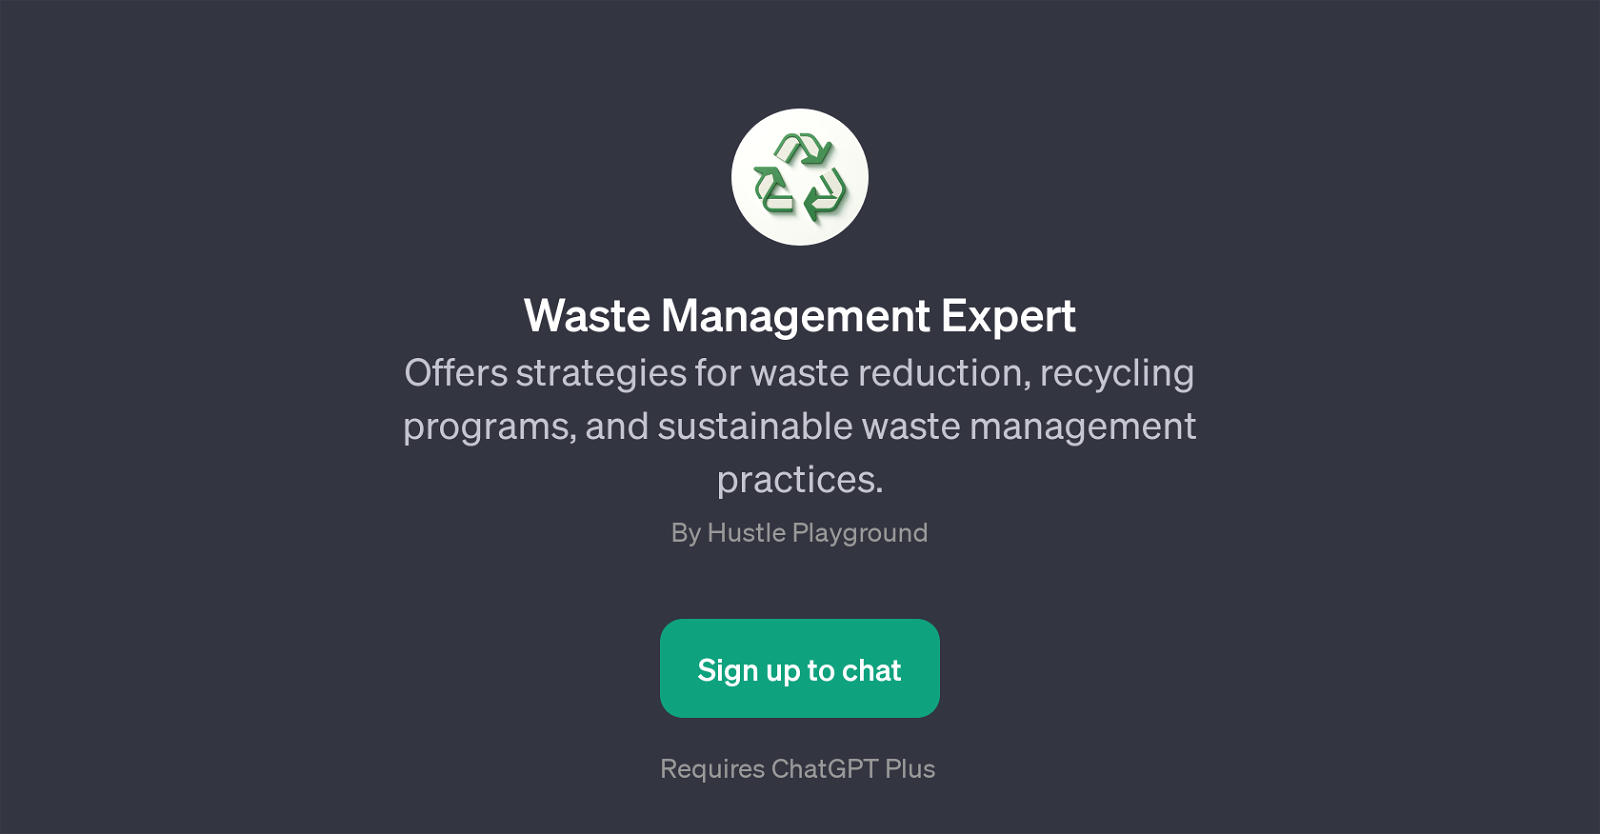 Waste Management Expert website